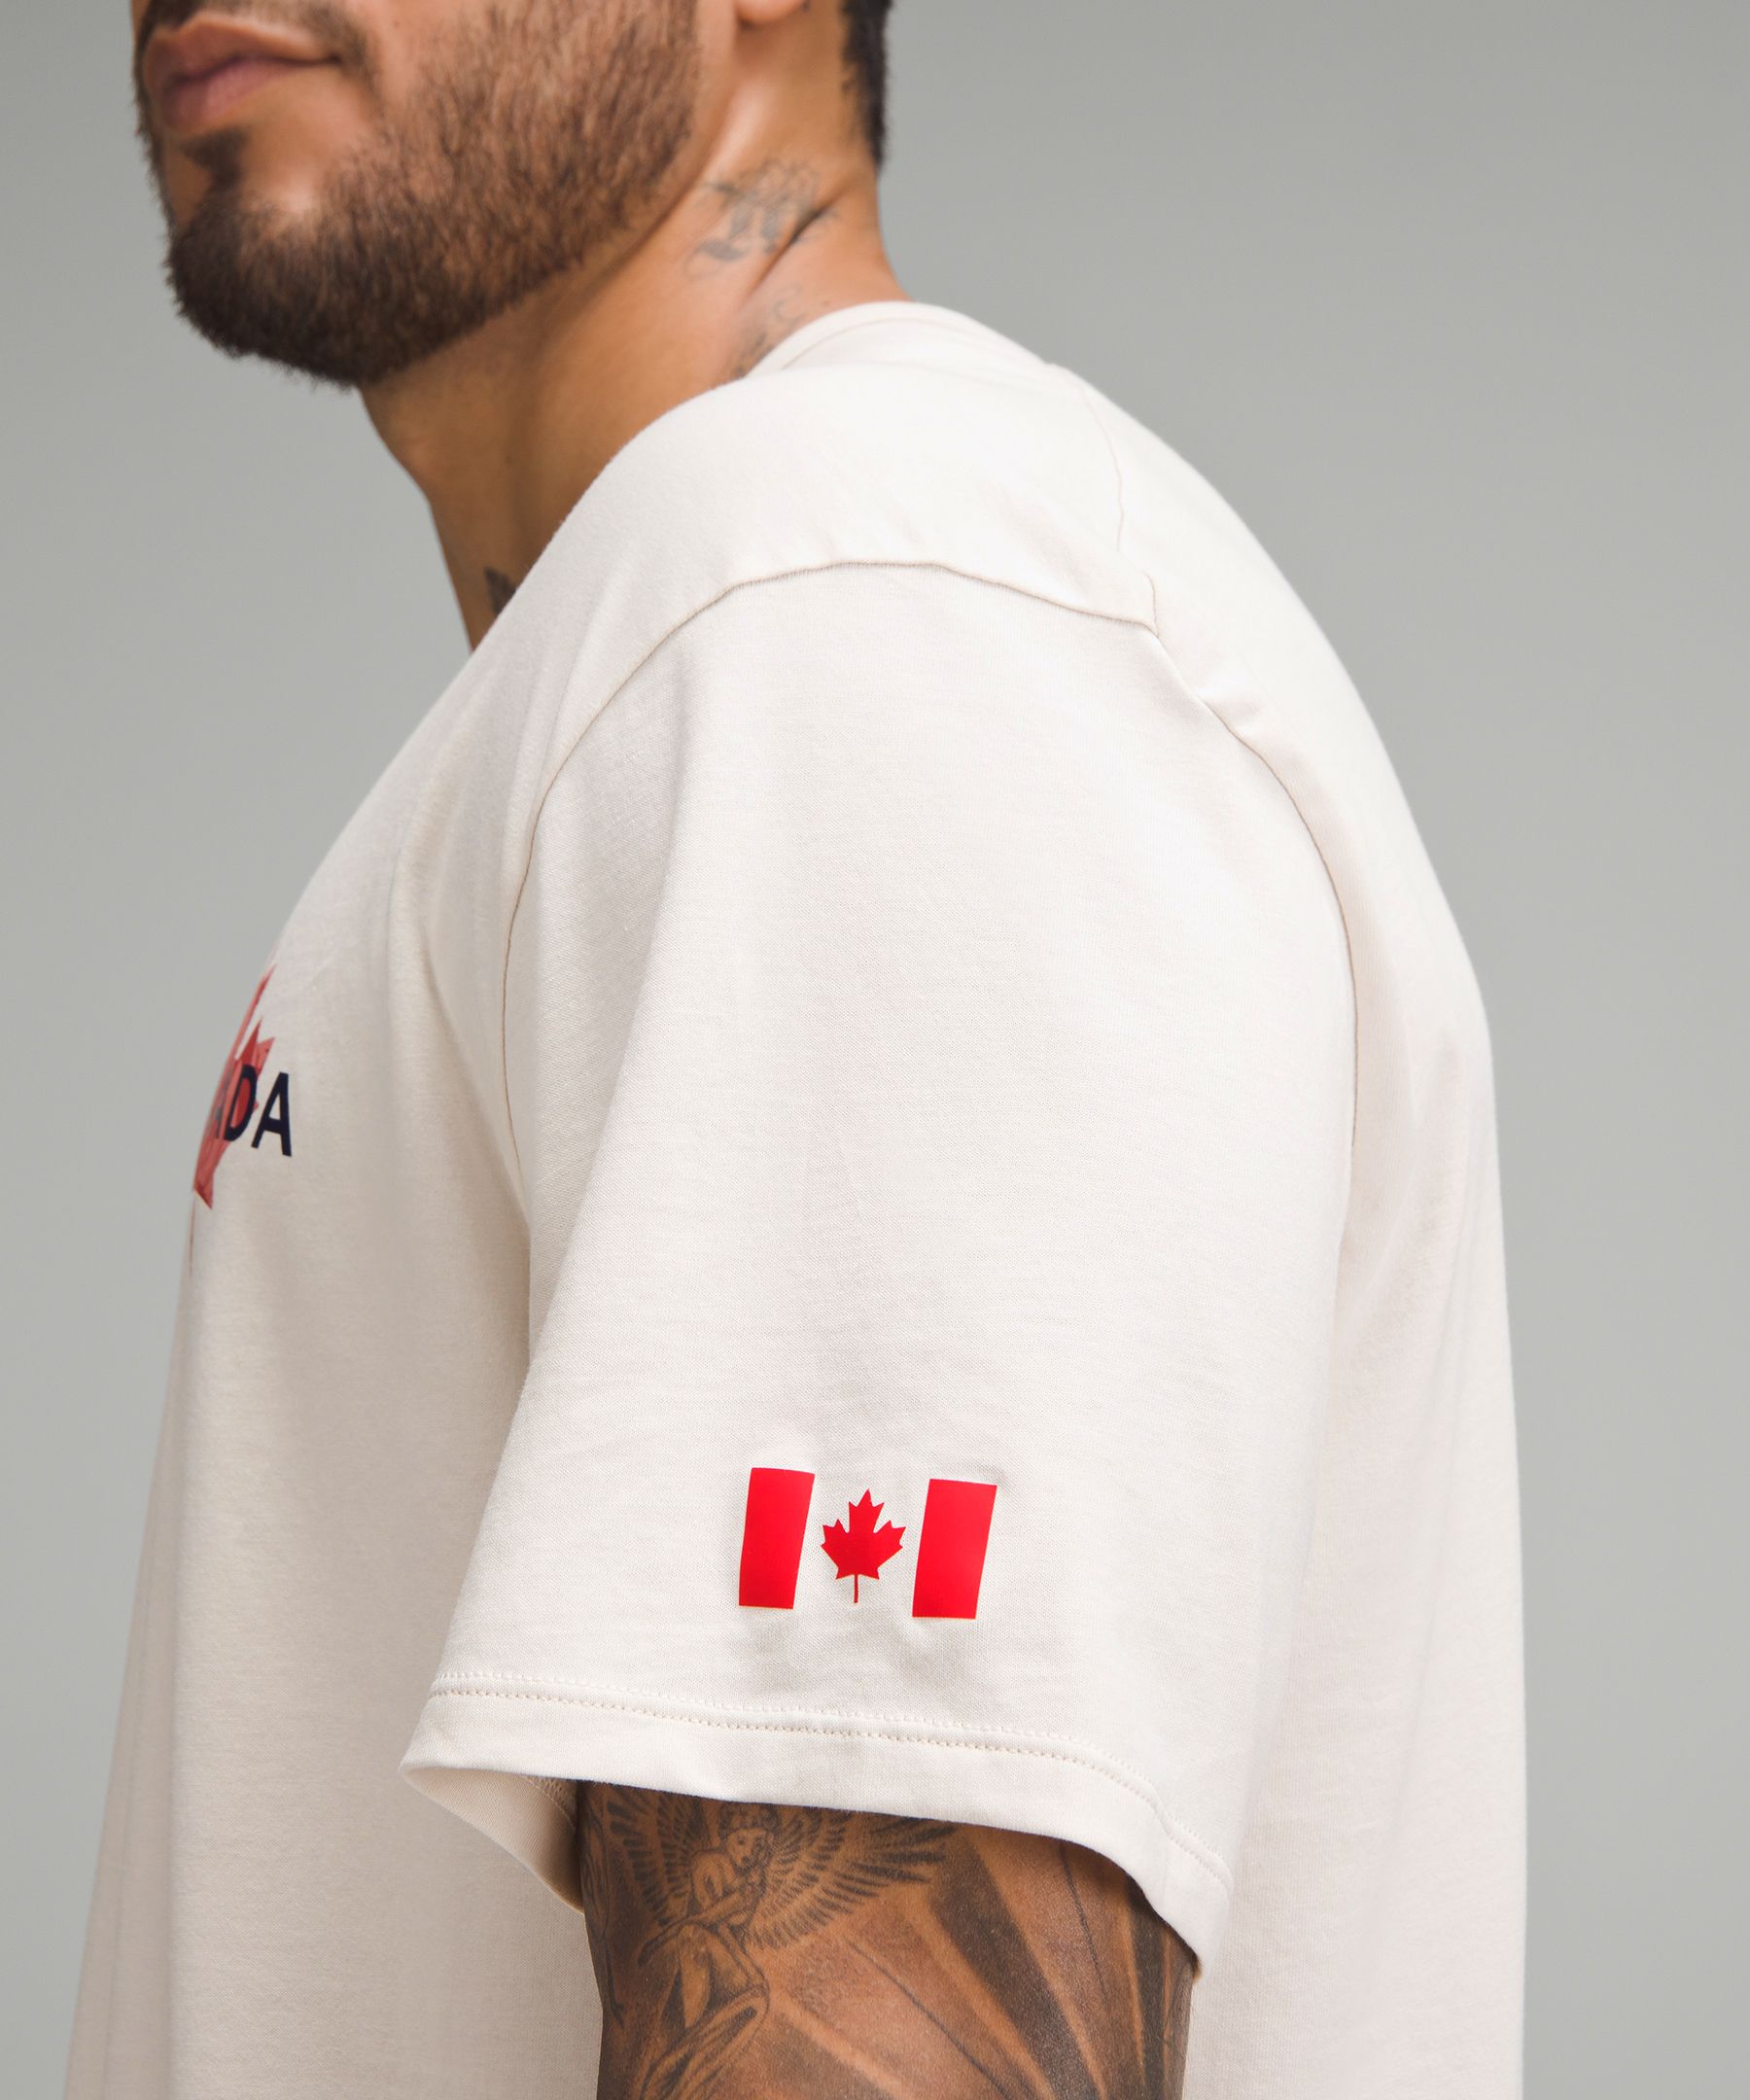 Team Canada Men's Cotton Jersey Graphic T-Shirt *COC Logo | Short Sleeve Shirts & Tee's